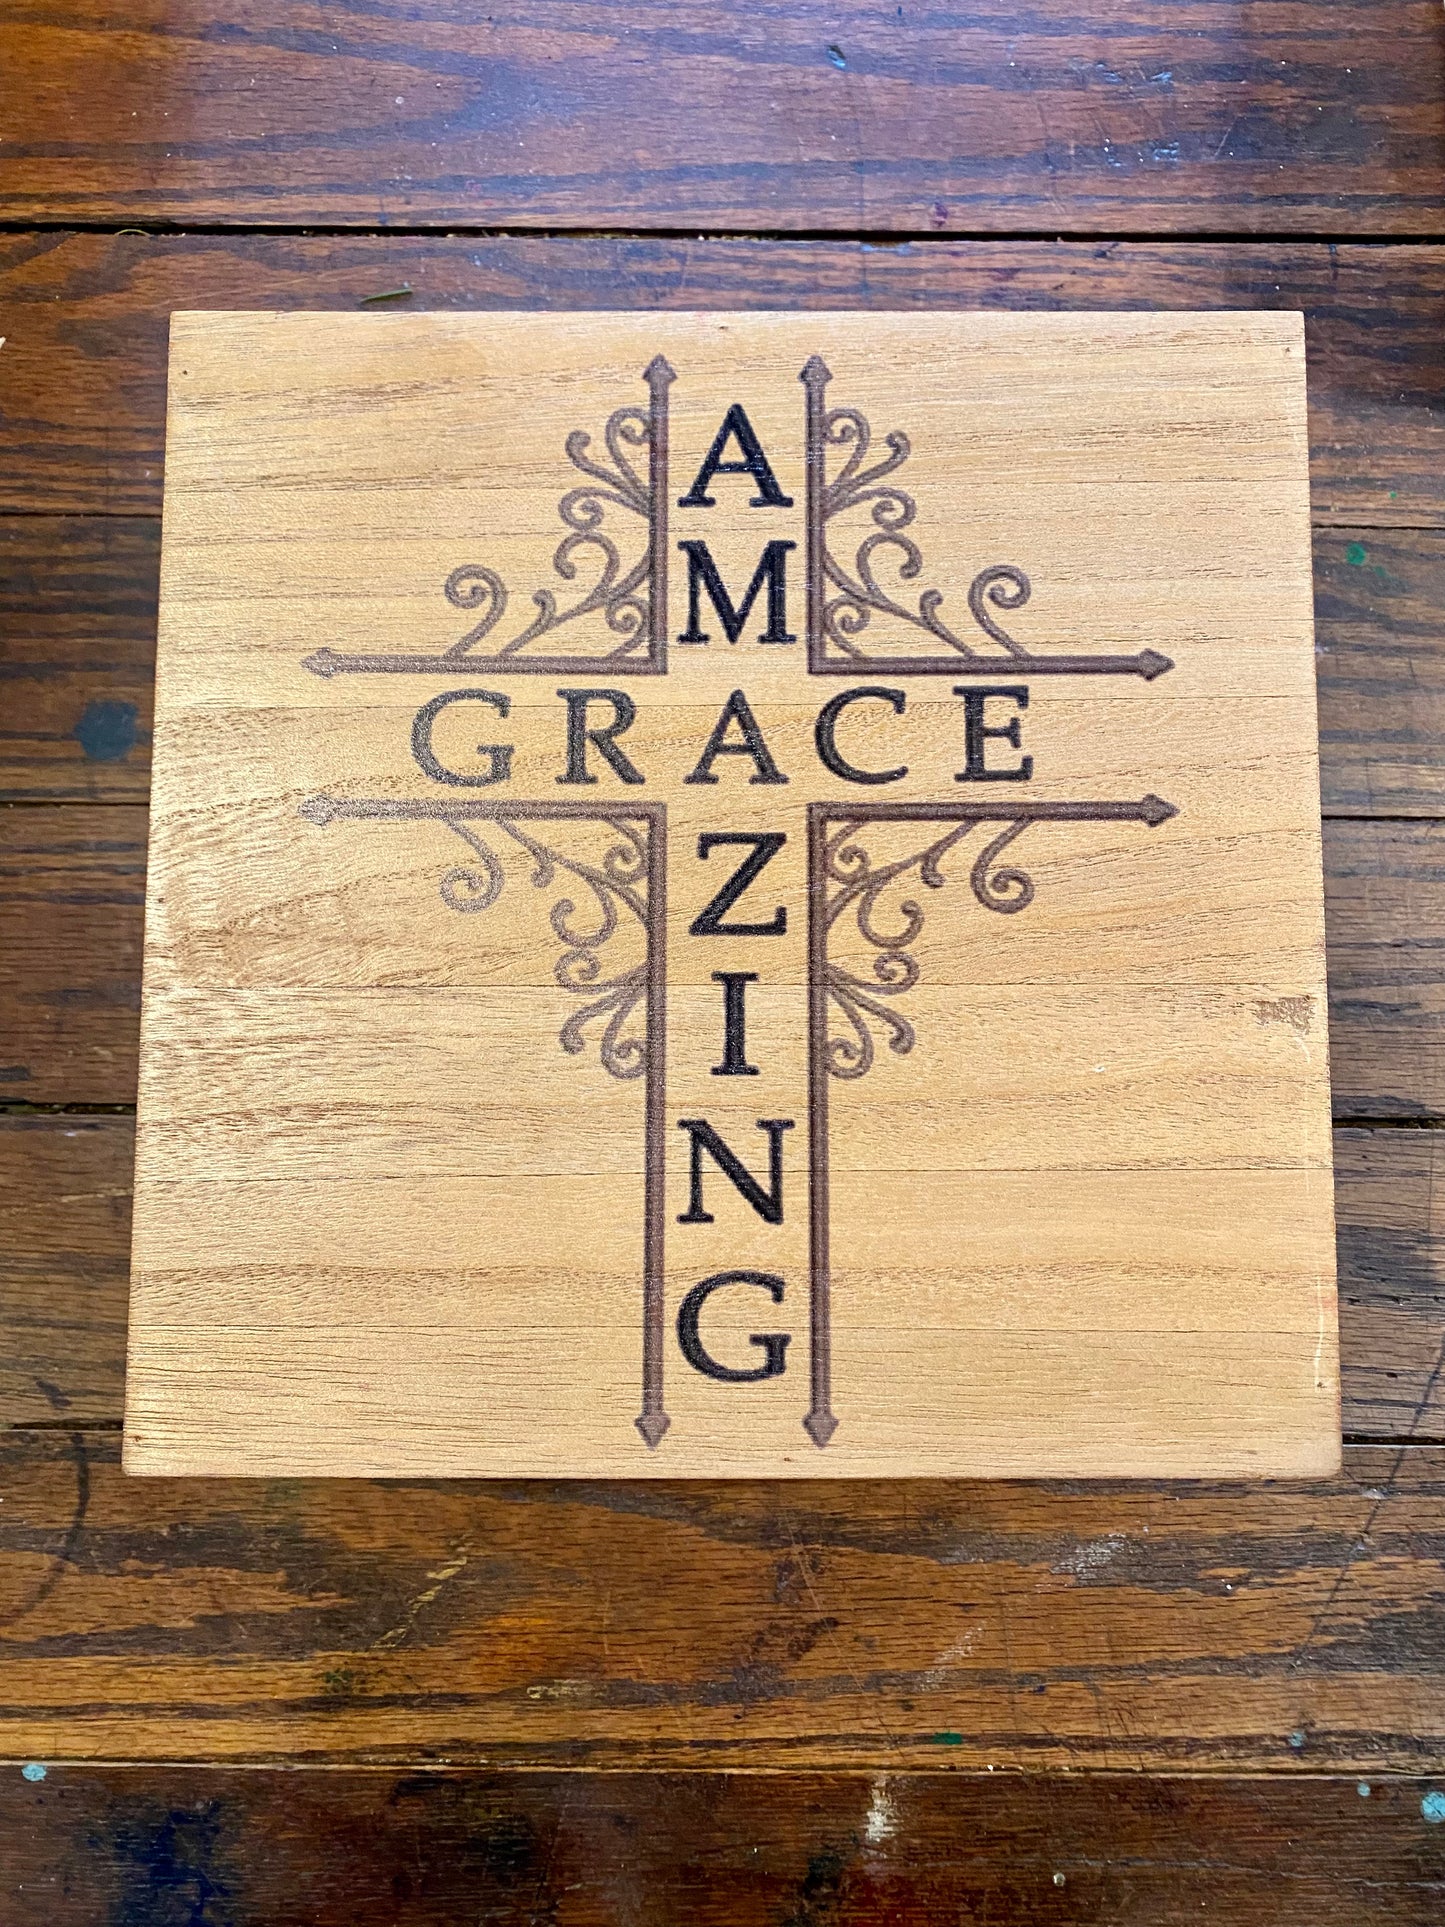 Amazing Grace Keepsake Box